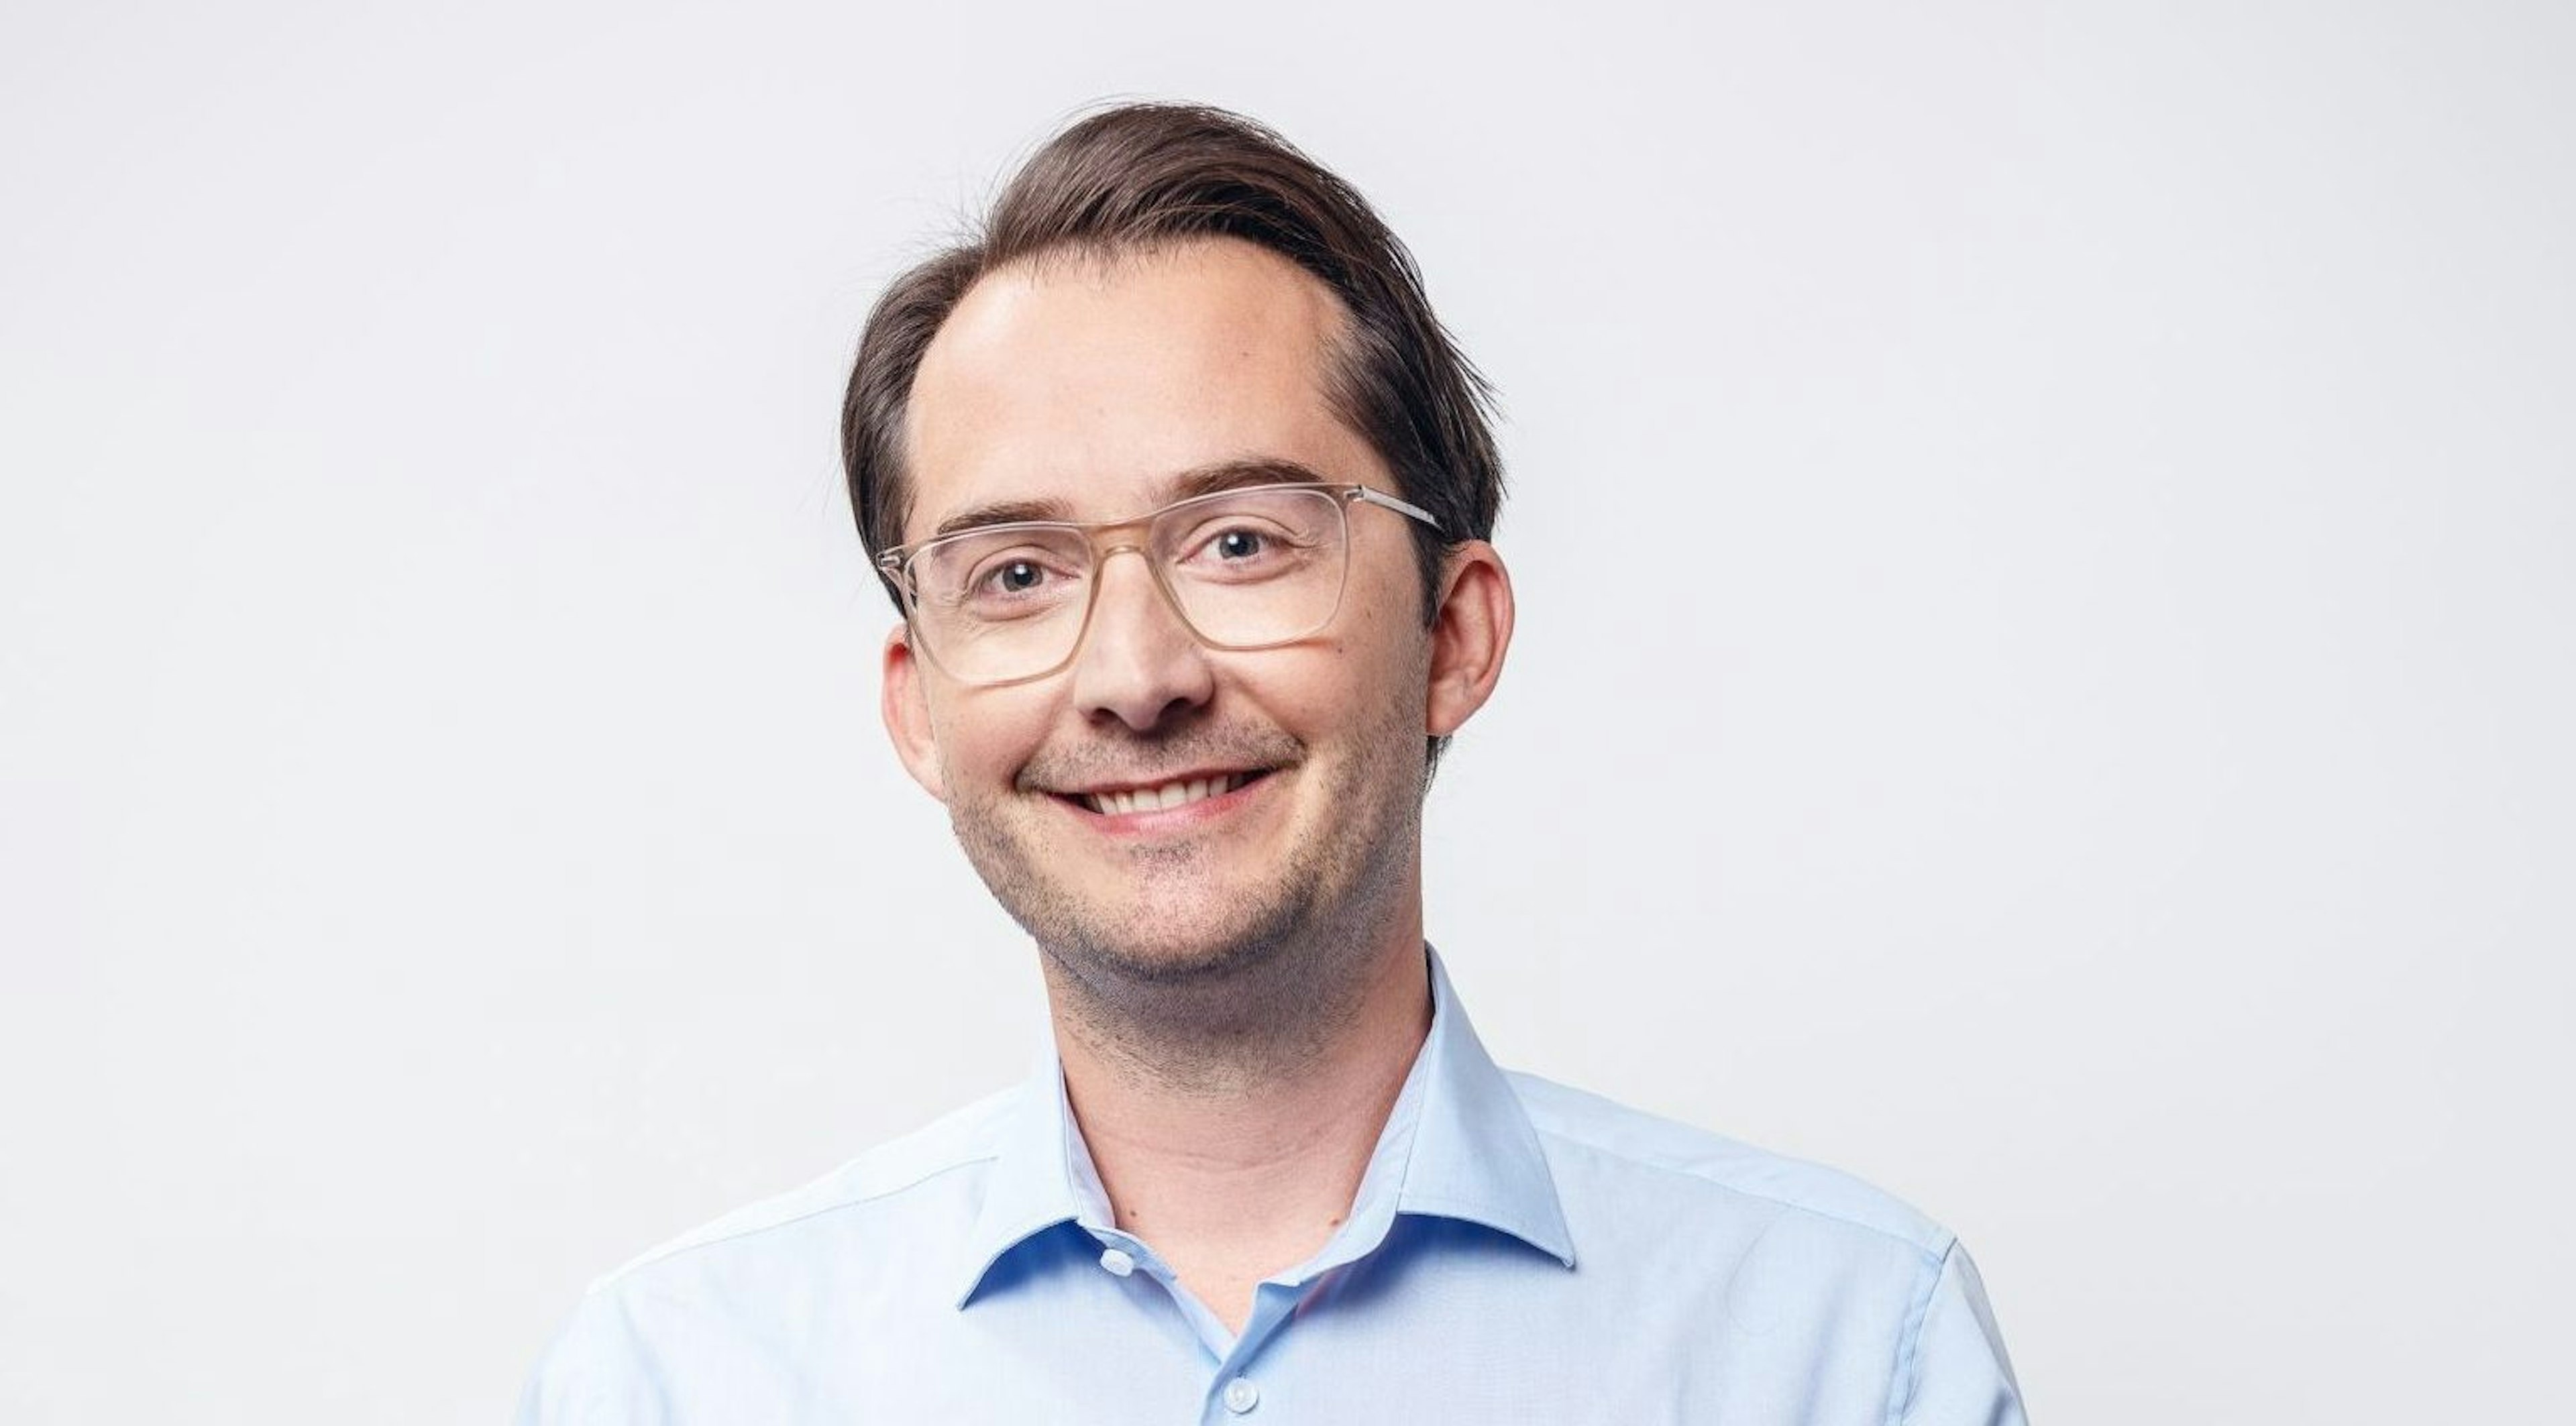 Christian Weiss, founding partner at Heal Capital